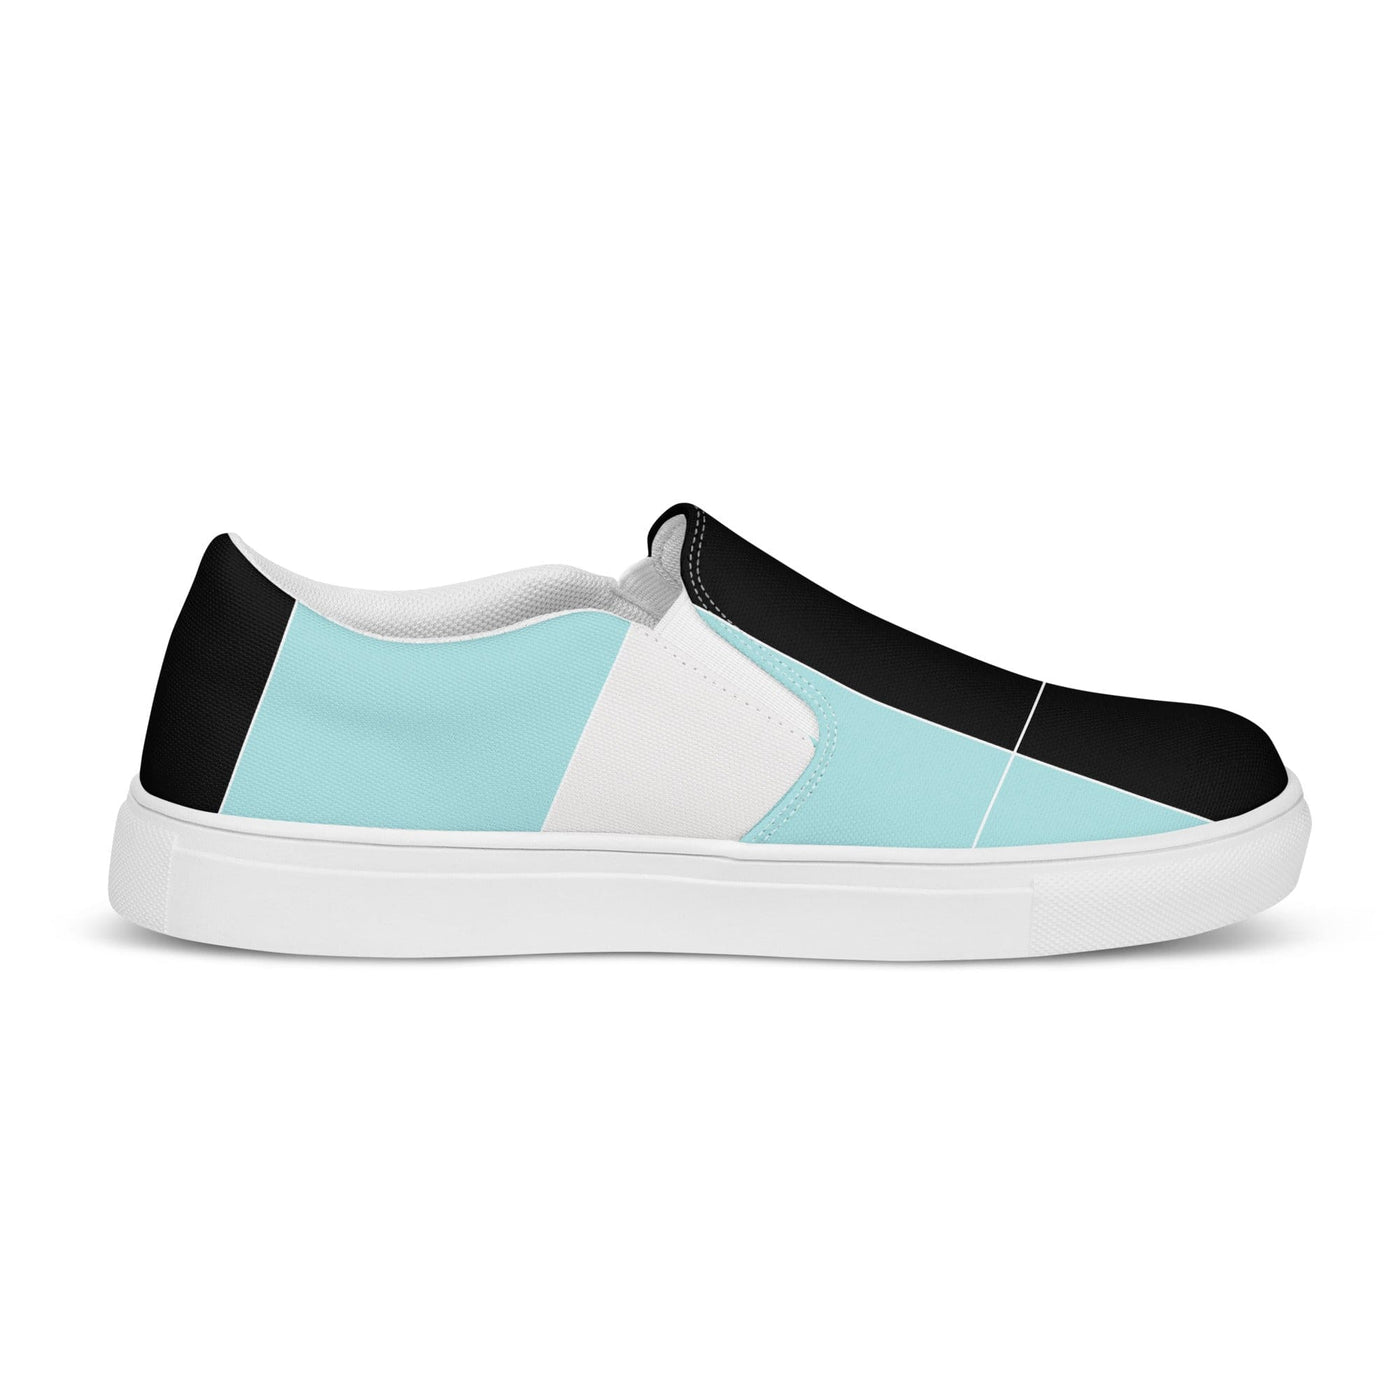 Men’s Slip-on Canvas Shoes Pastel Colorblock Pink/black/blue - Mens | Sneakers